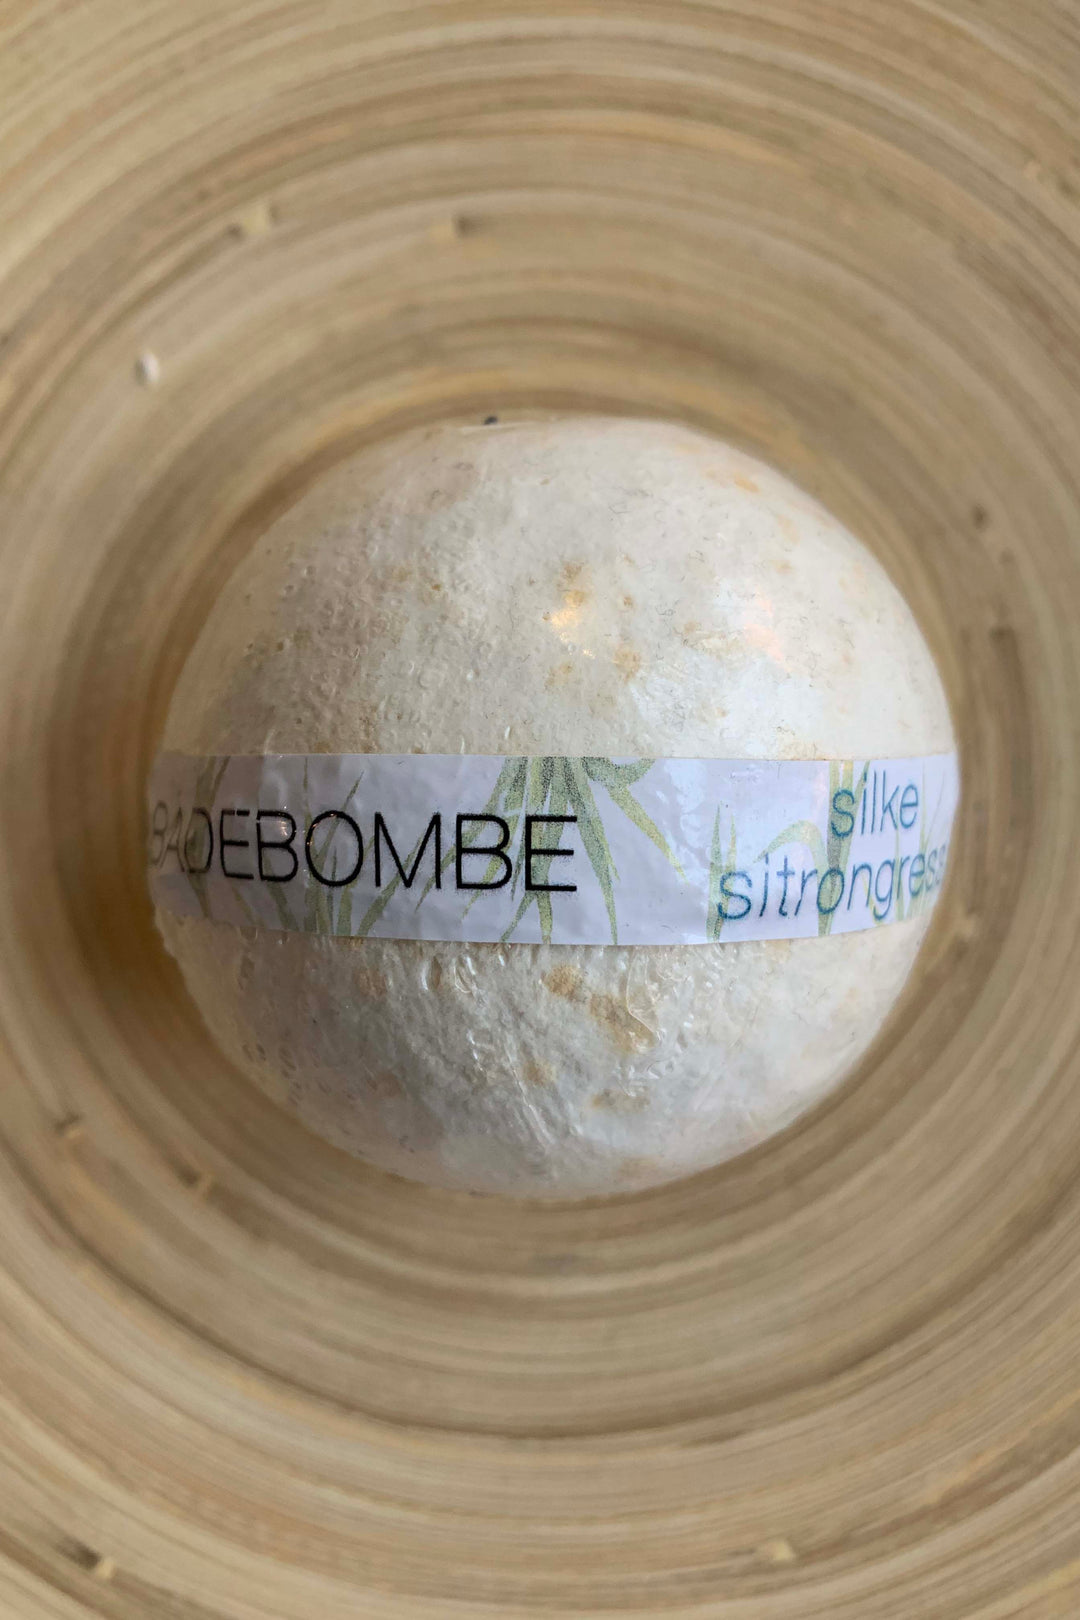 Stone Soap Spa Badebombe – Silke